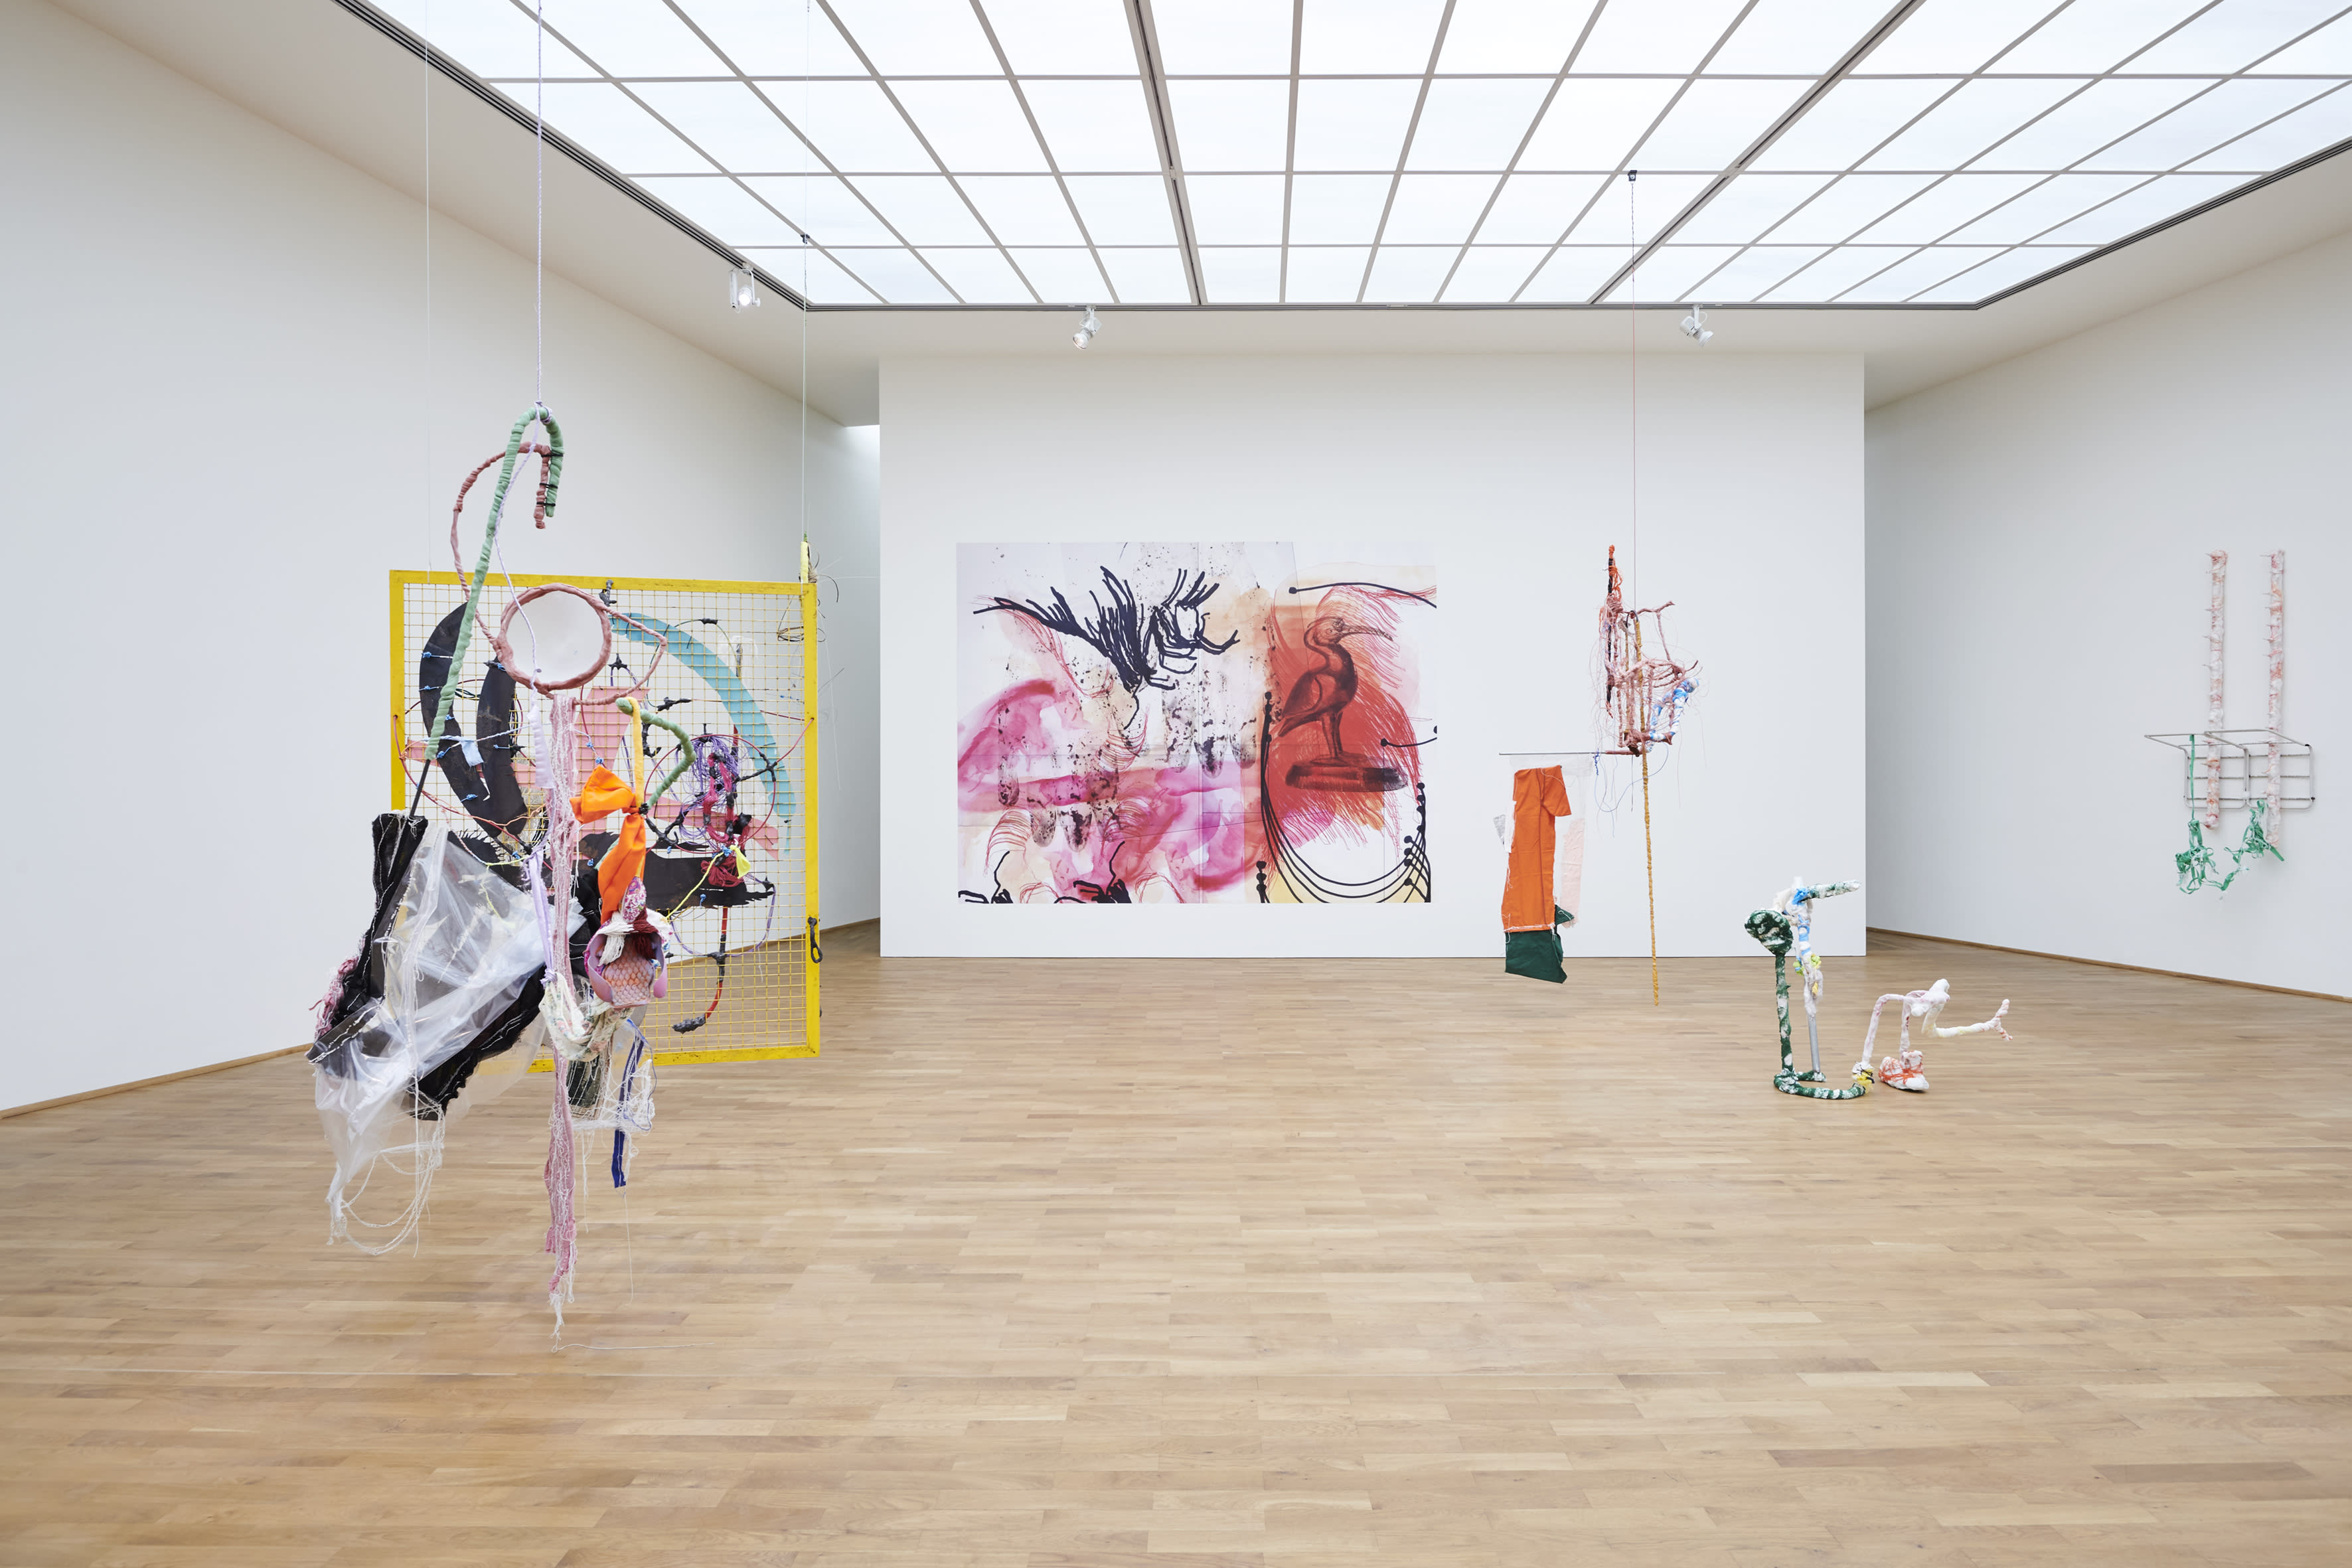 Julien Creuzet, “Frank Walter – A Retrospective”, installation view, Museum für Moderne Kunst, Frankfurt am Main, Germany, 2020. Courtesy of the artist and High Art, Paris. (05/2021)